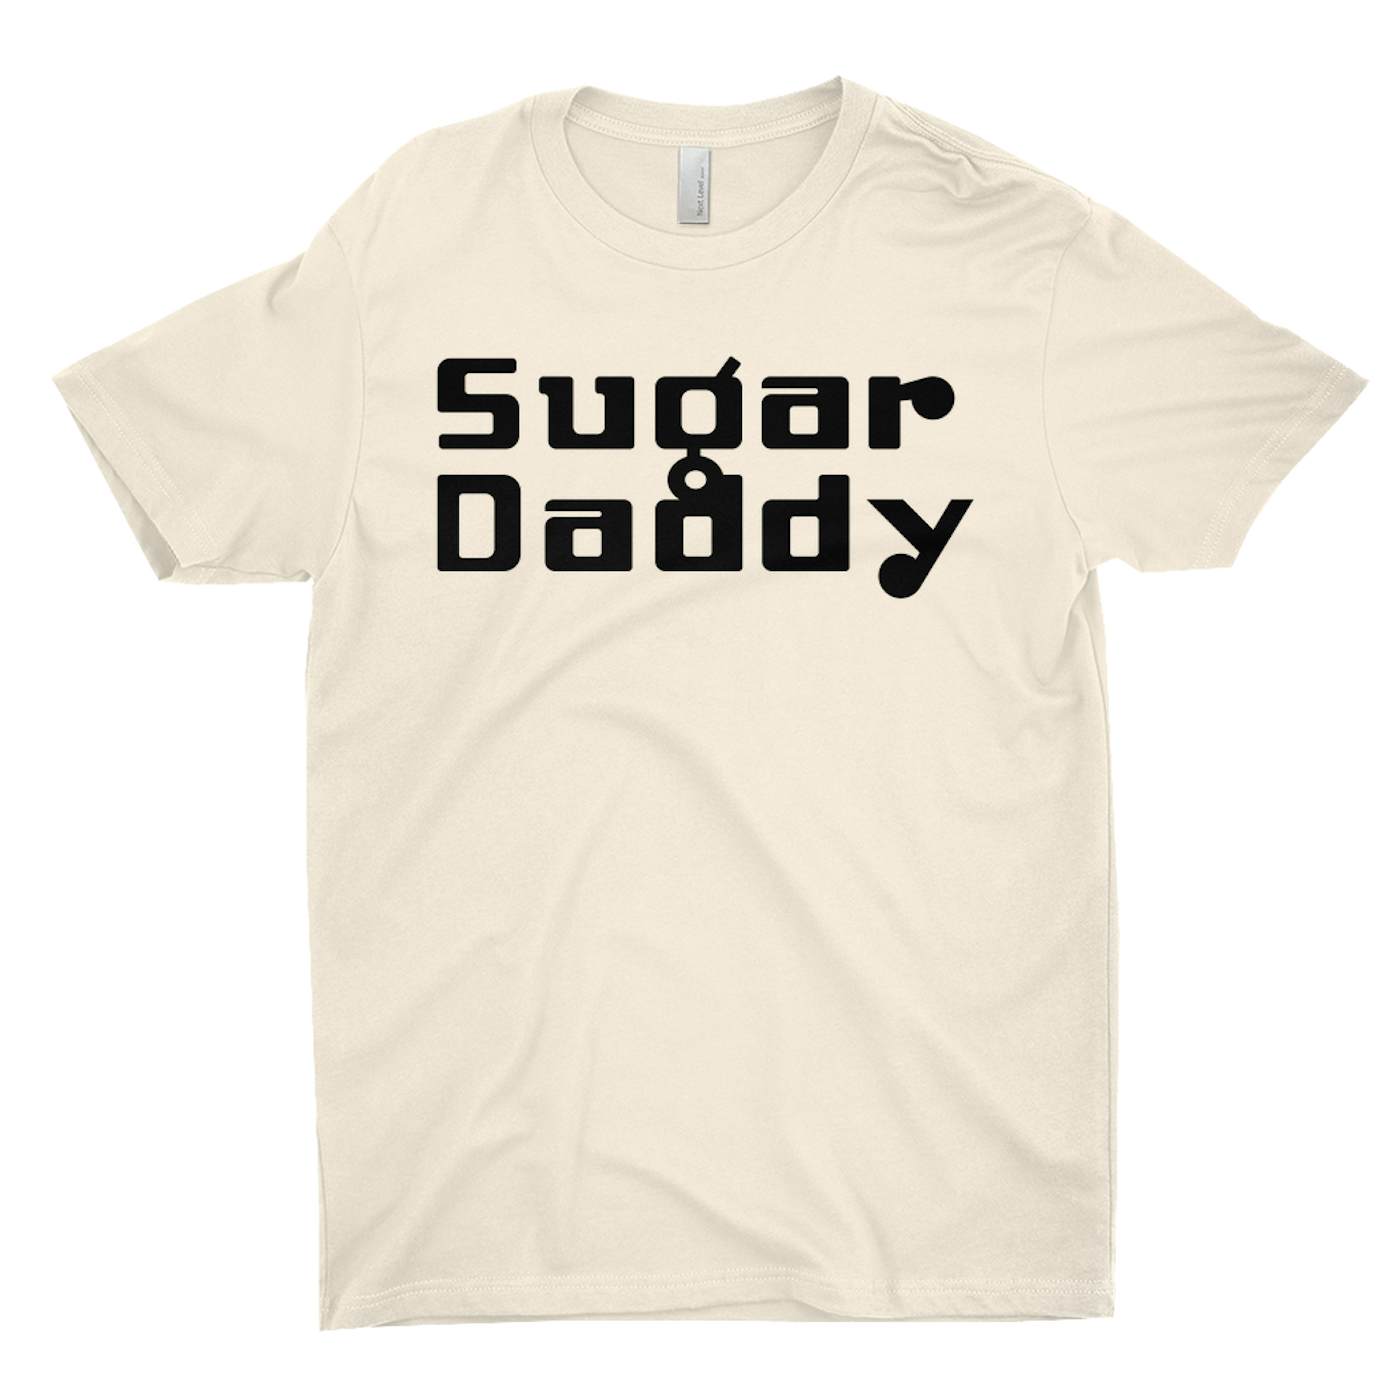 Ramones T-Shirt | Sugar Daddy Worn By Dee Dee Ramone Ramones Shirt